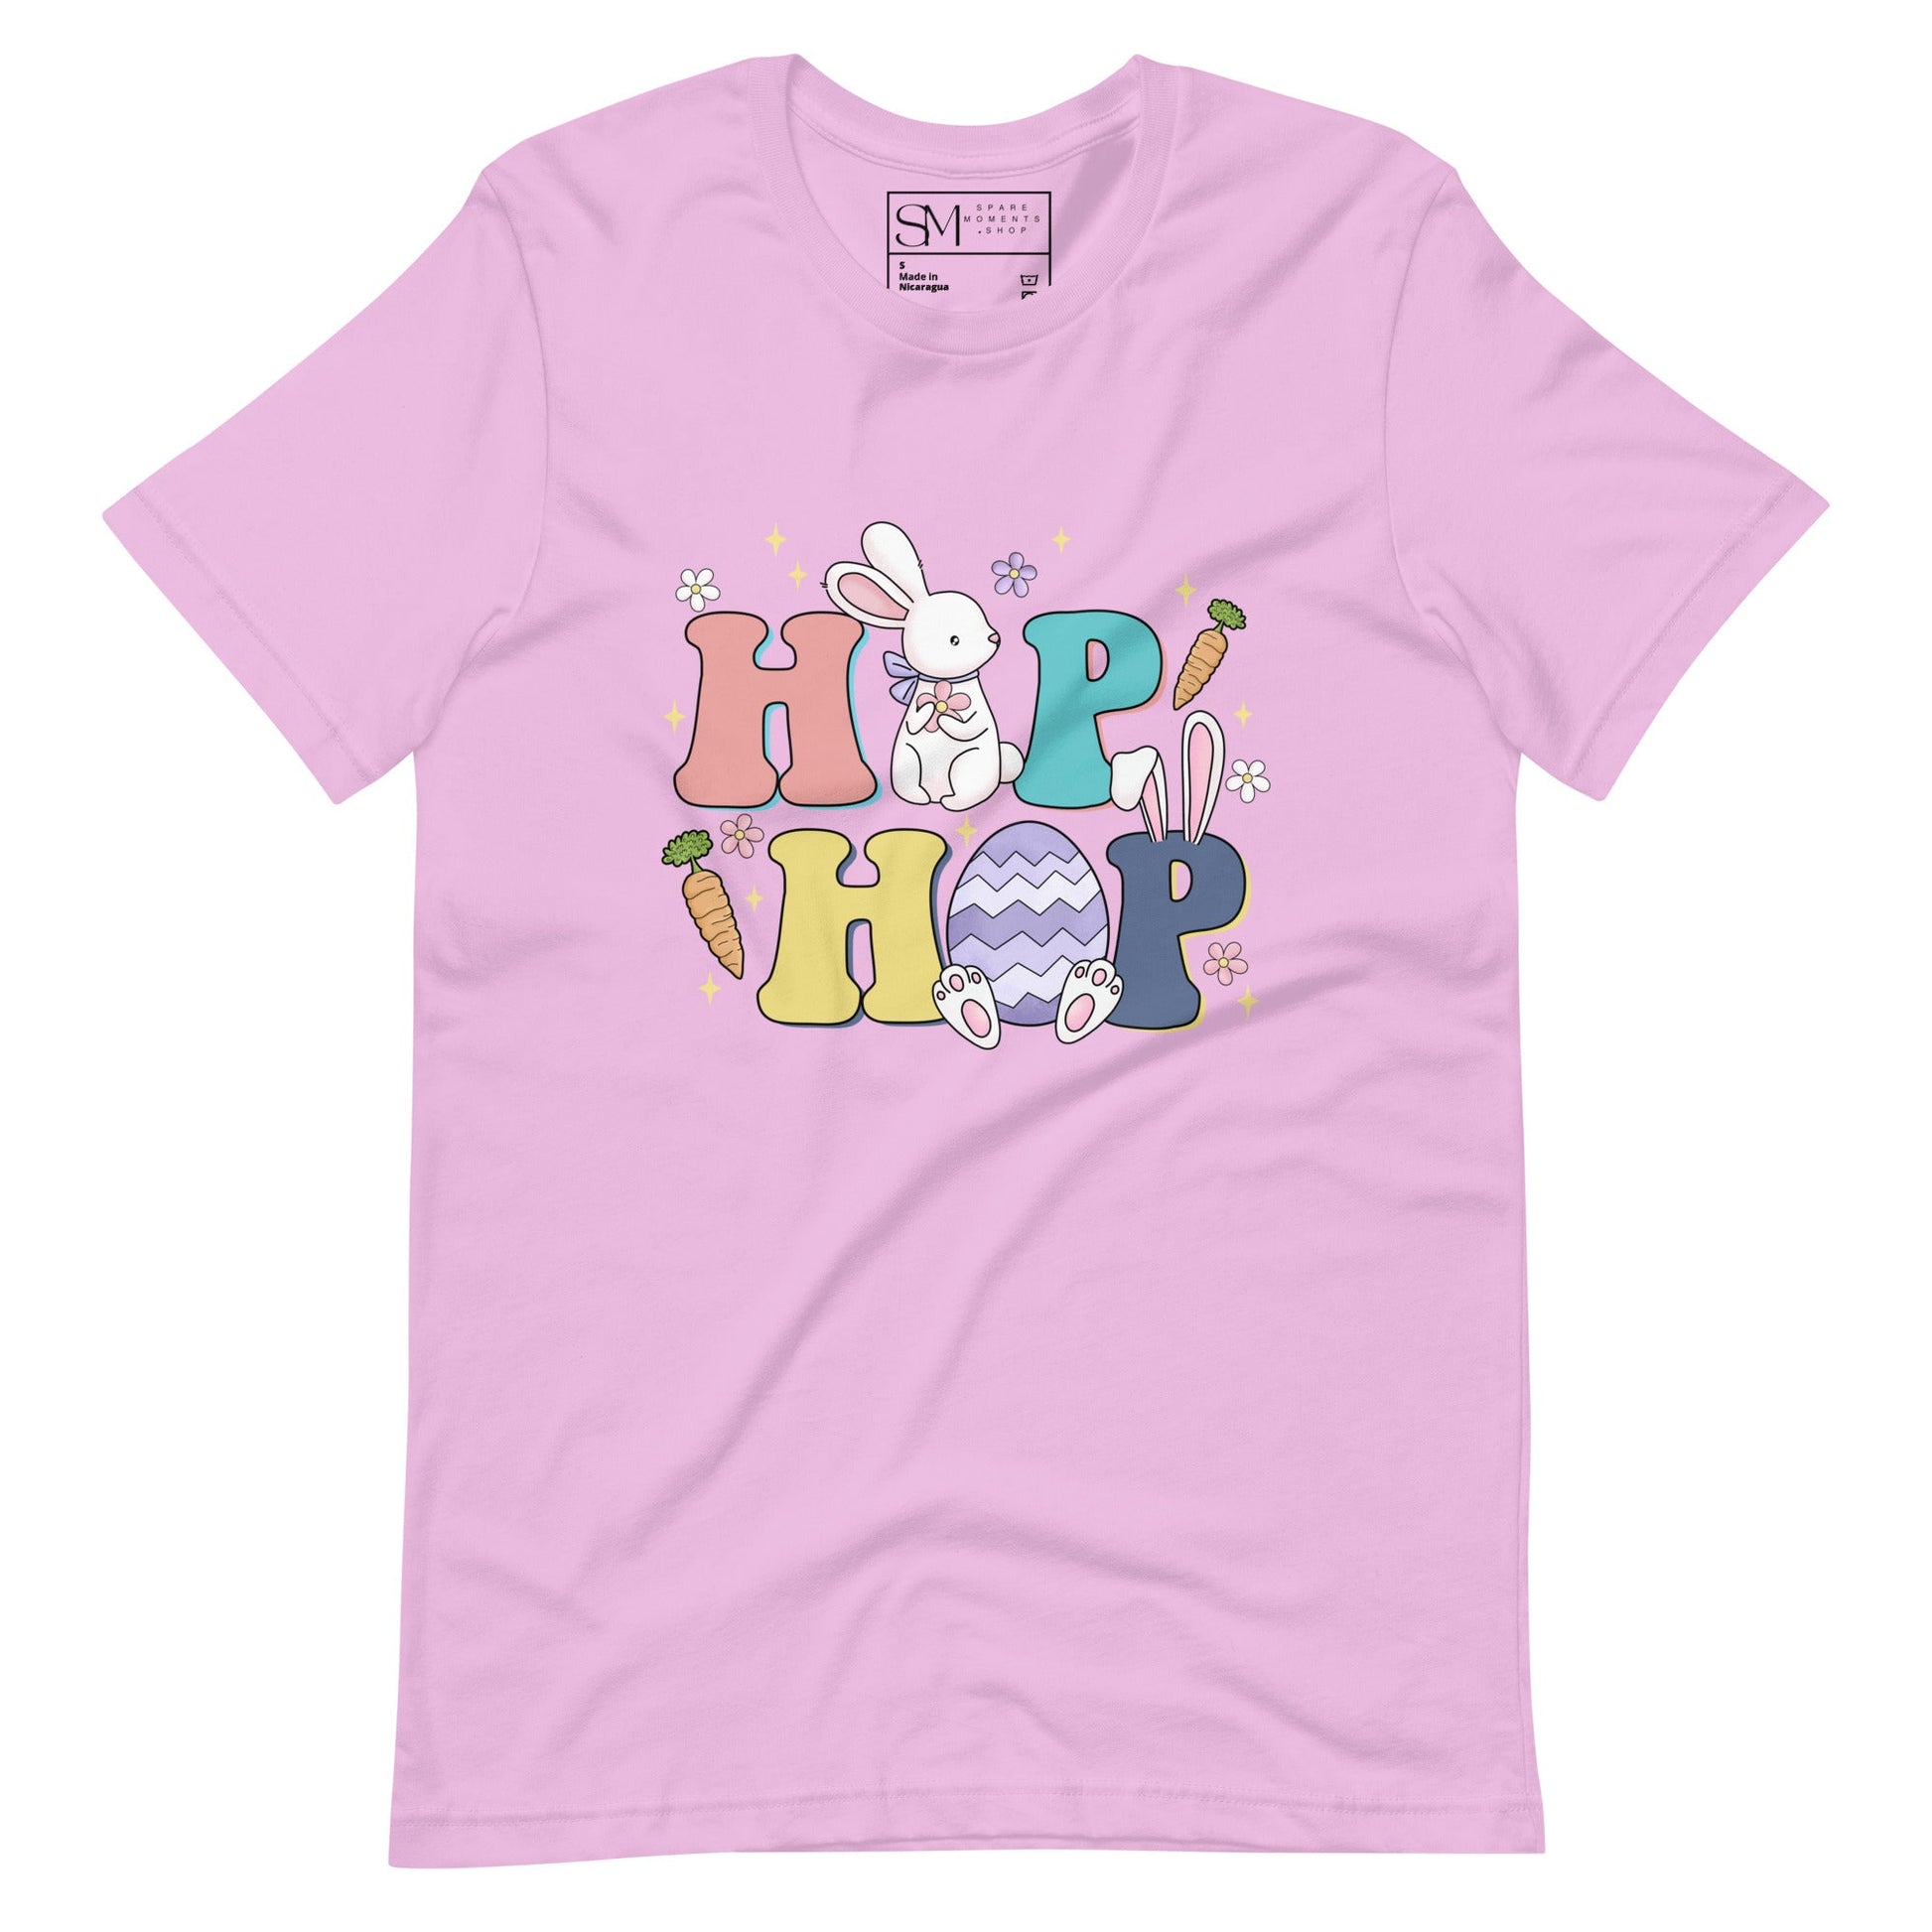 Hip Hop Easter | Unisex t-shirt